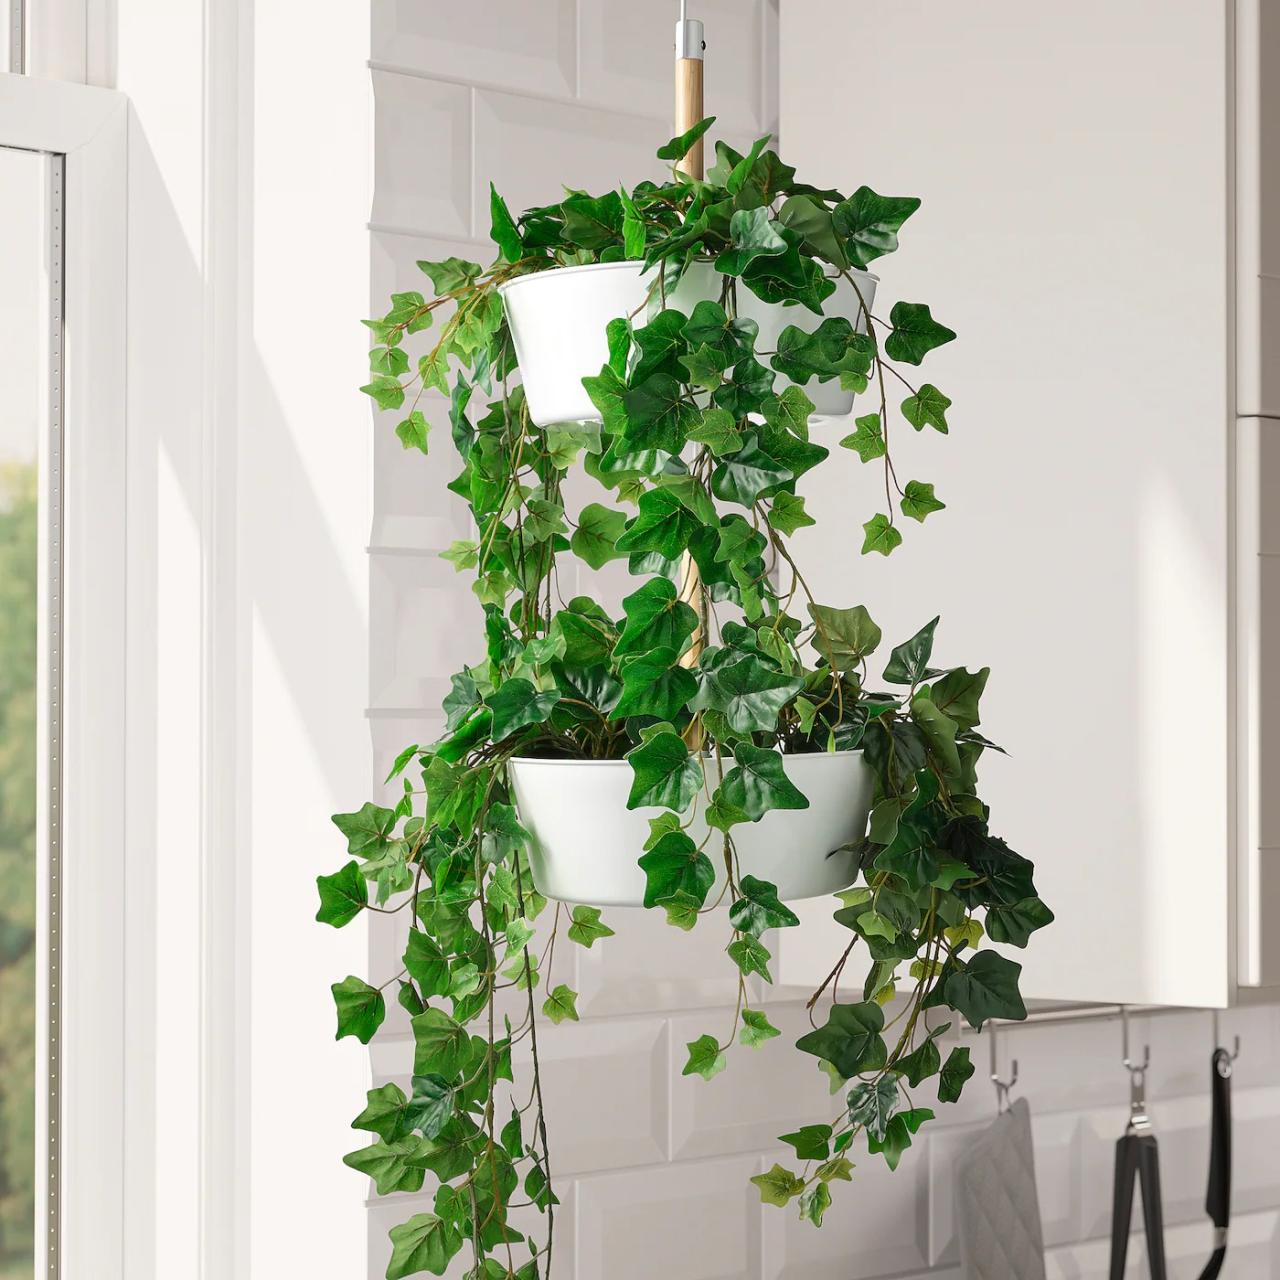 Hanging Plants Indoor | Artificial Hanging Plants Indoor: Enhance Your Space with Greenery